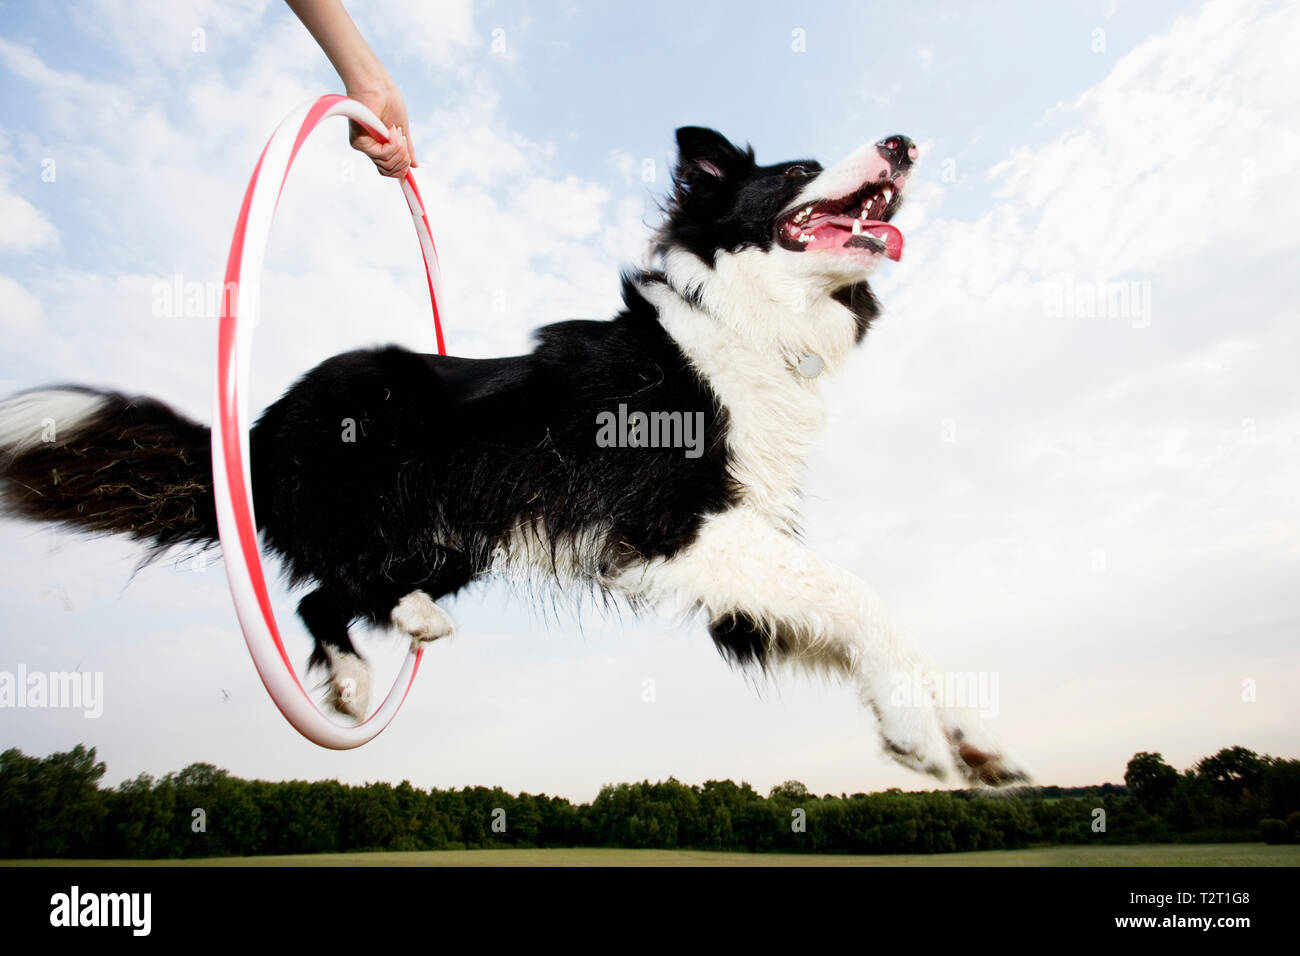 A Sheepdog jumping through a hoop Stock Photo